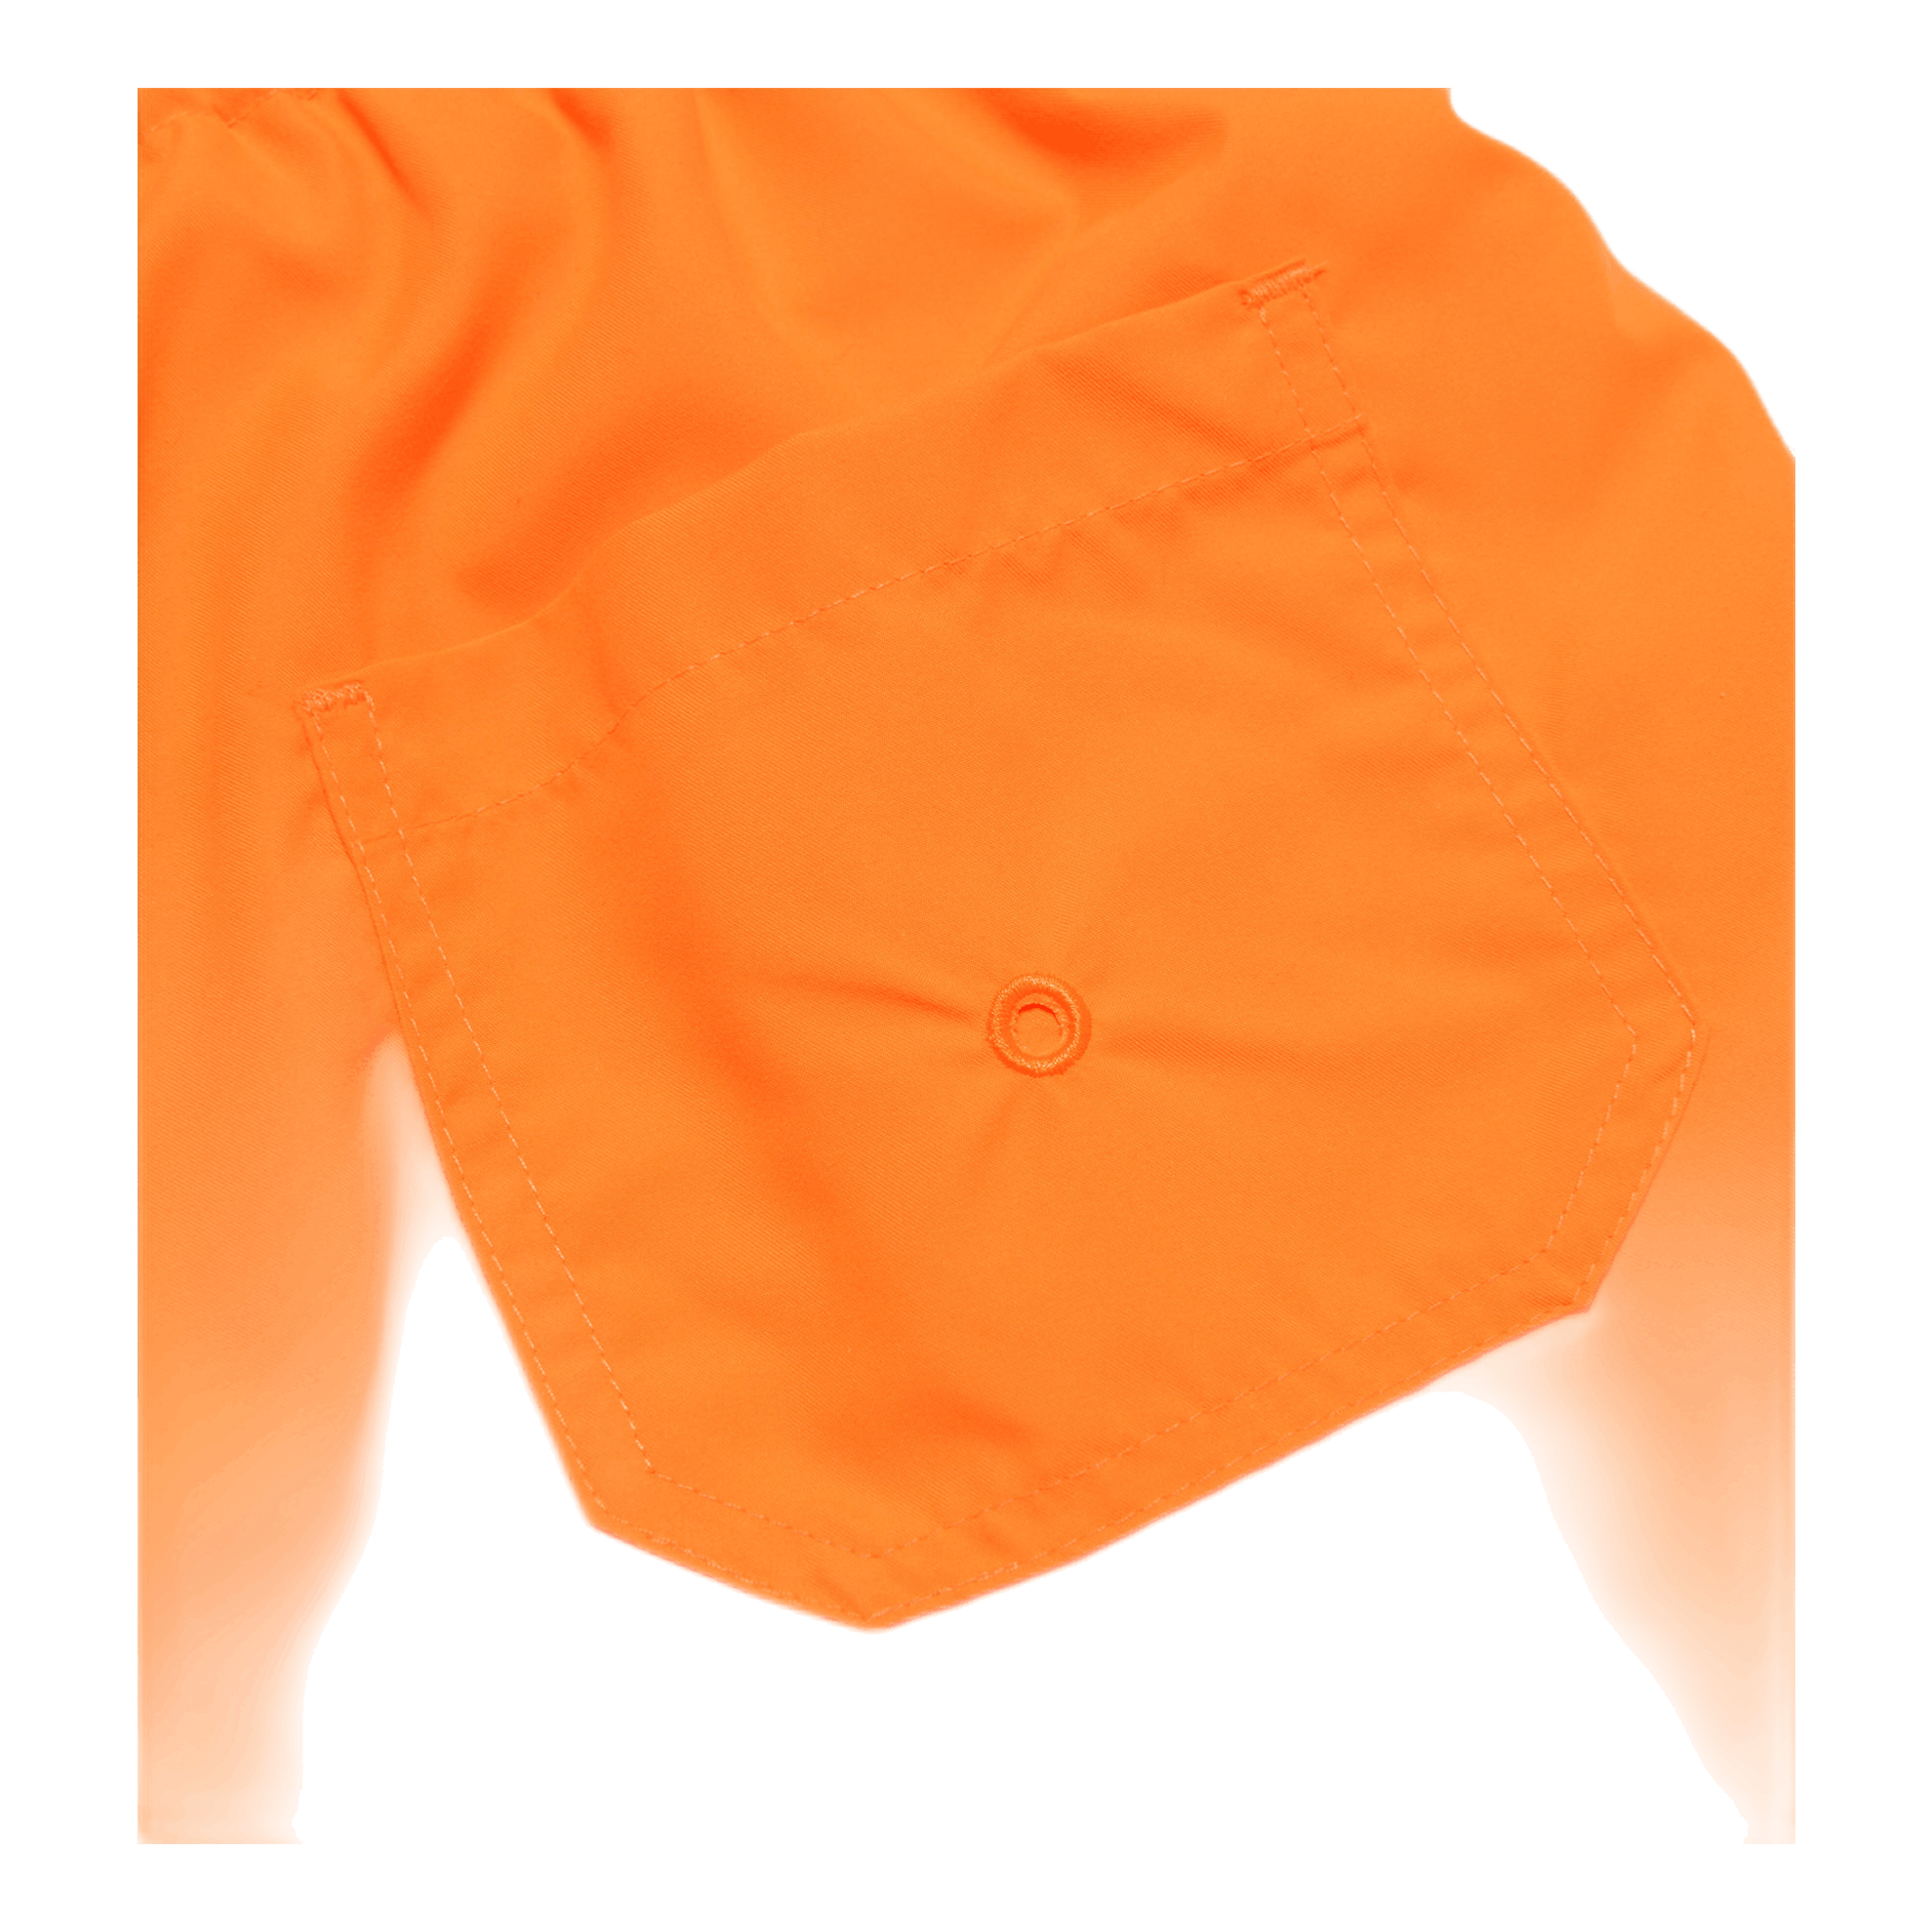 Palm Swim Shorts Orange